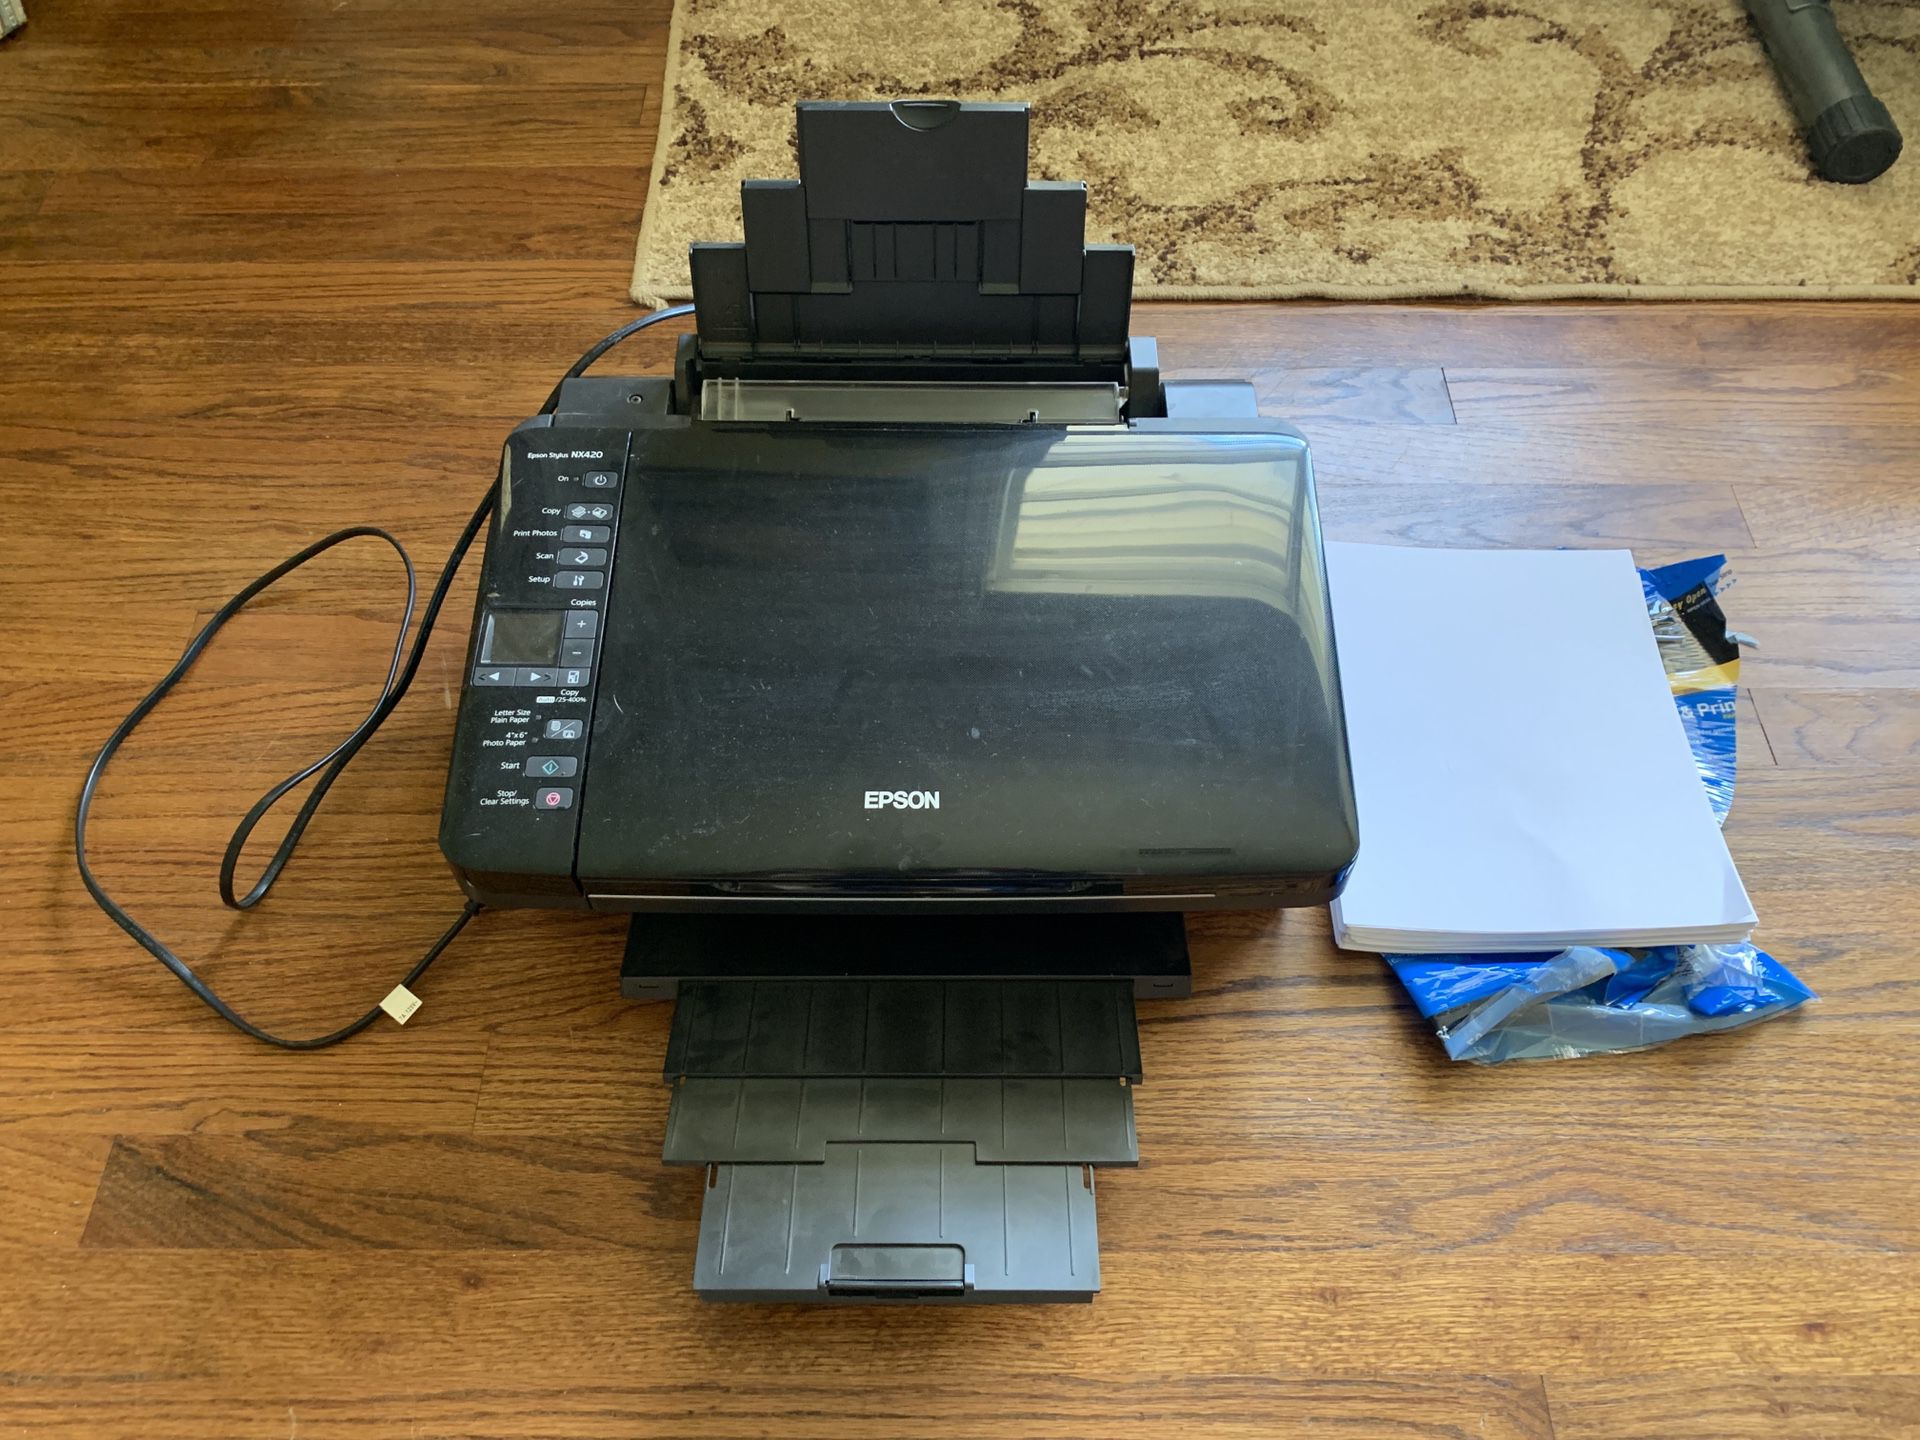 Epson All-in-one Printer - $15 OBO